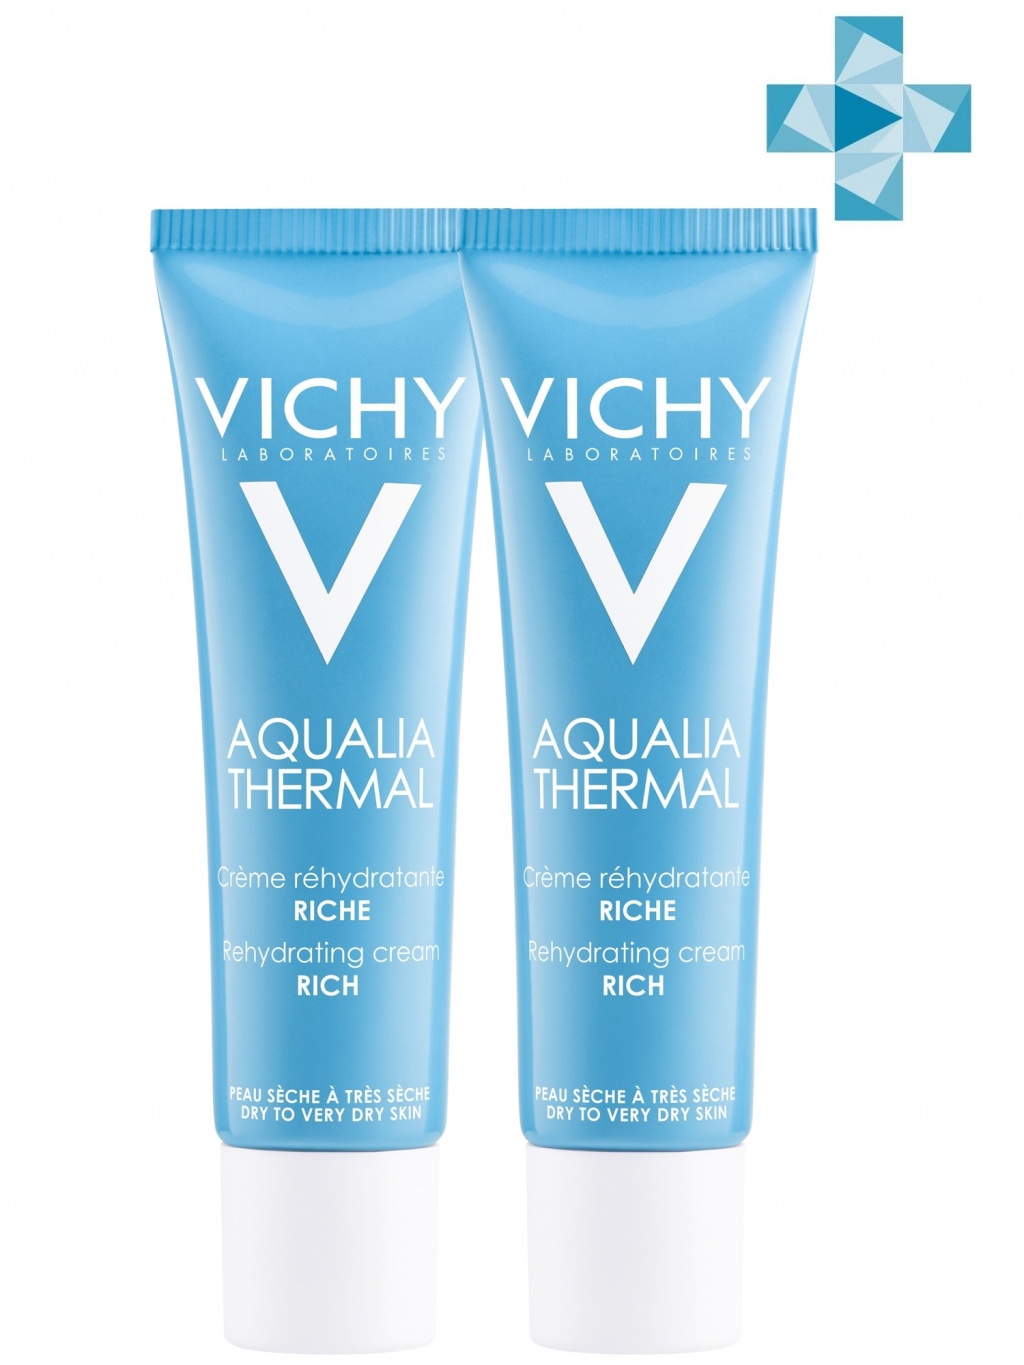 Vichy Комплект Aqualia Thermal Riche Насыщенный крем для сухой и очень сухой кожи, 2*30 мл (Vichy, Aqualia Thermal)